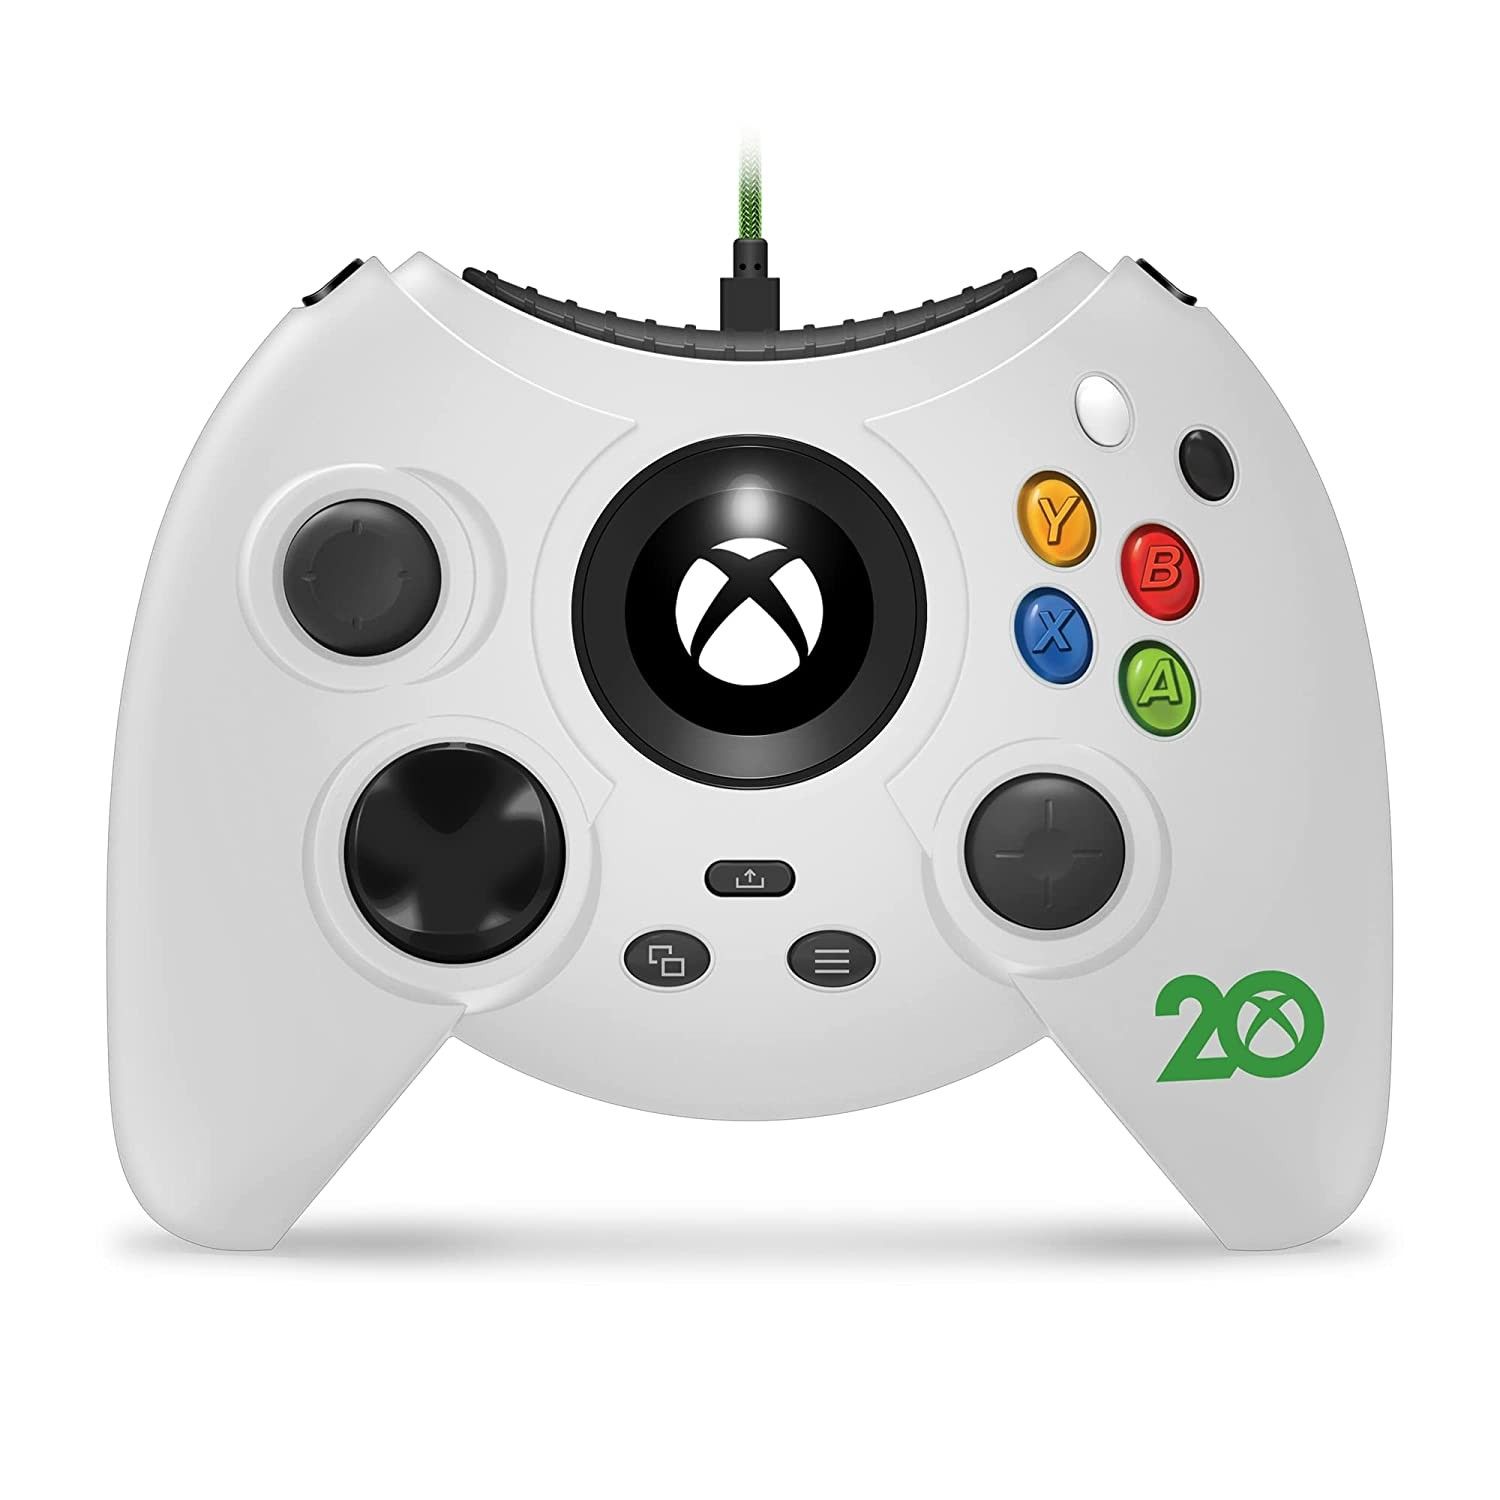 Hyperkin Duke Wired Controller for Xbox